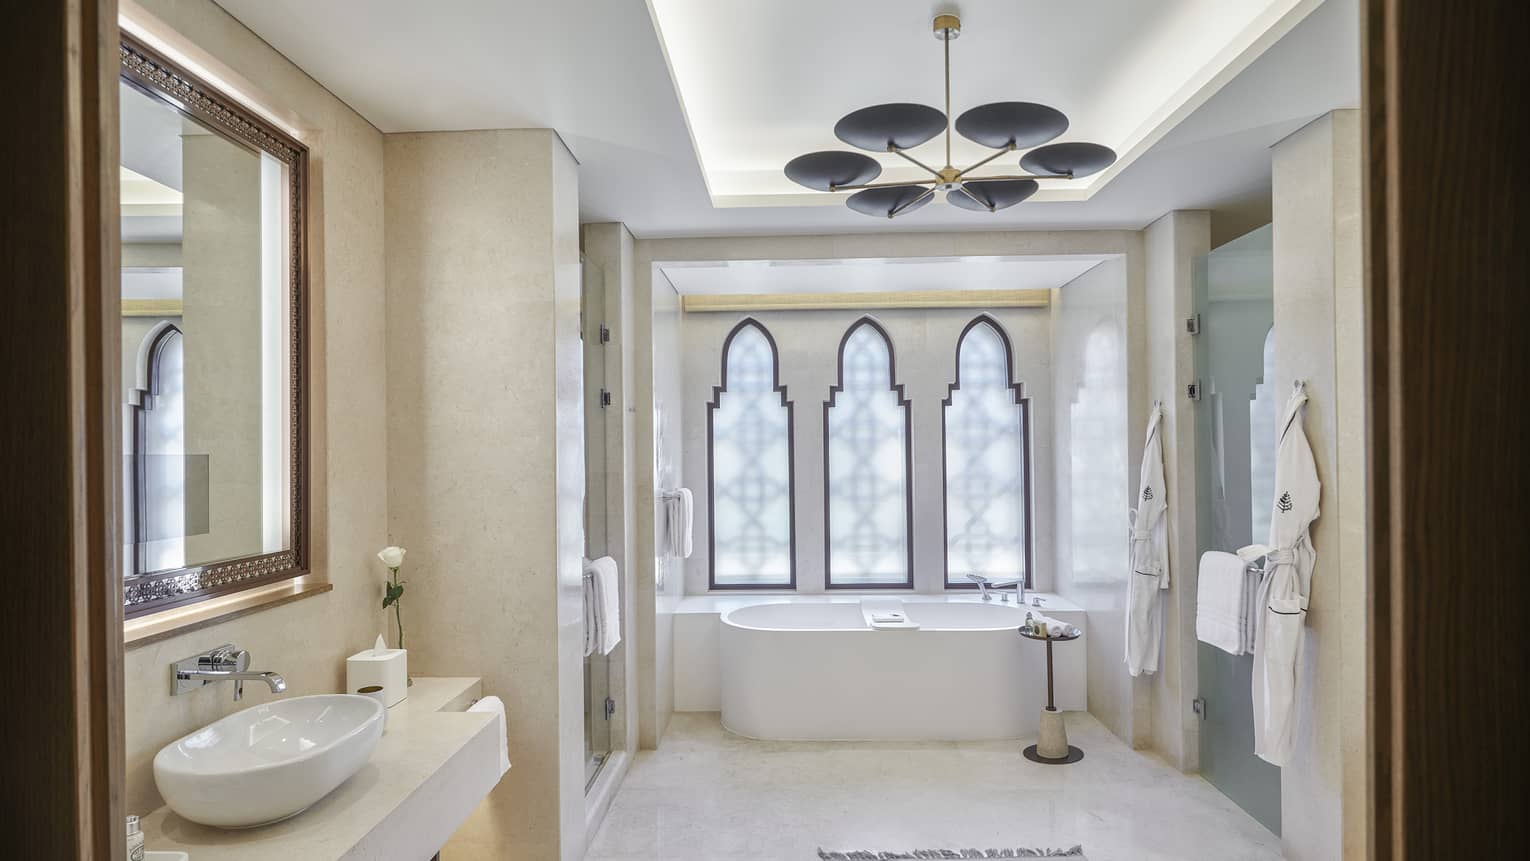 Large bathroom with tub, three windows and hanging light